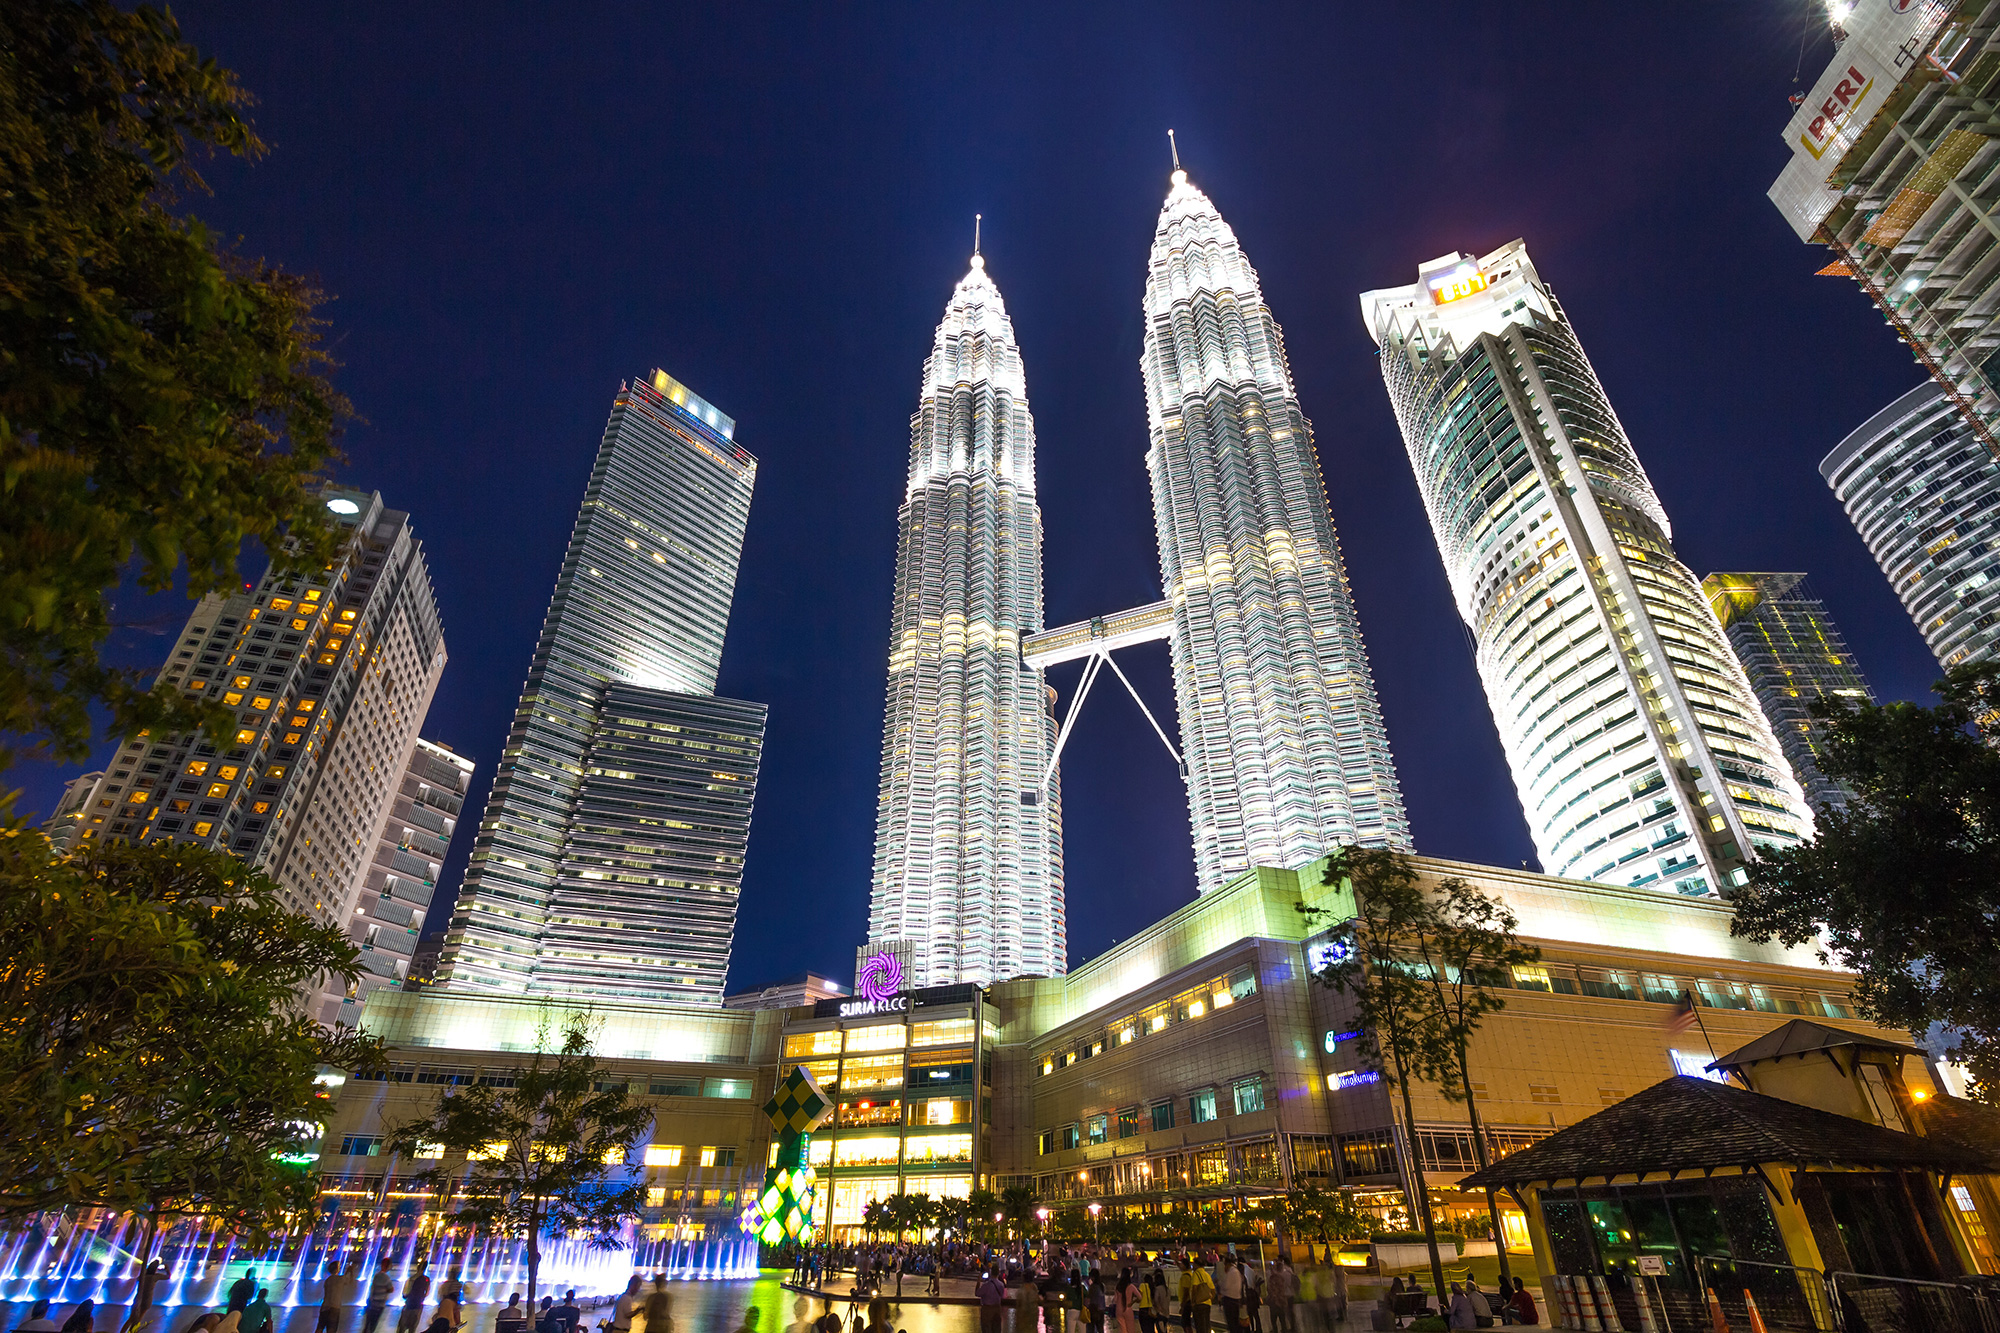 Petronas Twin Towers with Musical fountain at night in Kuala Lumpur, Malaysia from Shutterstock.com